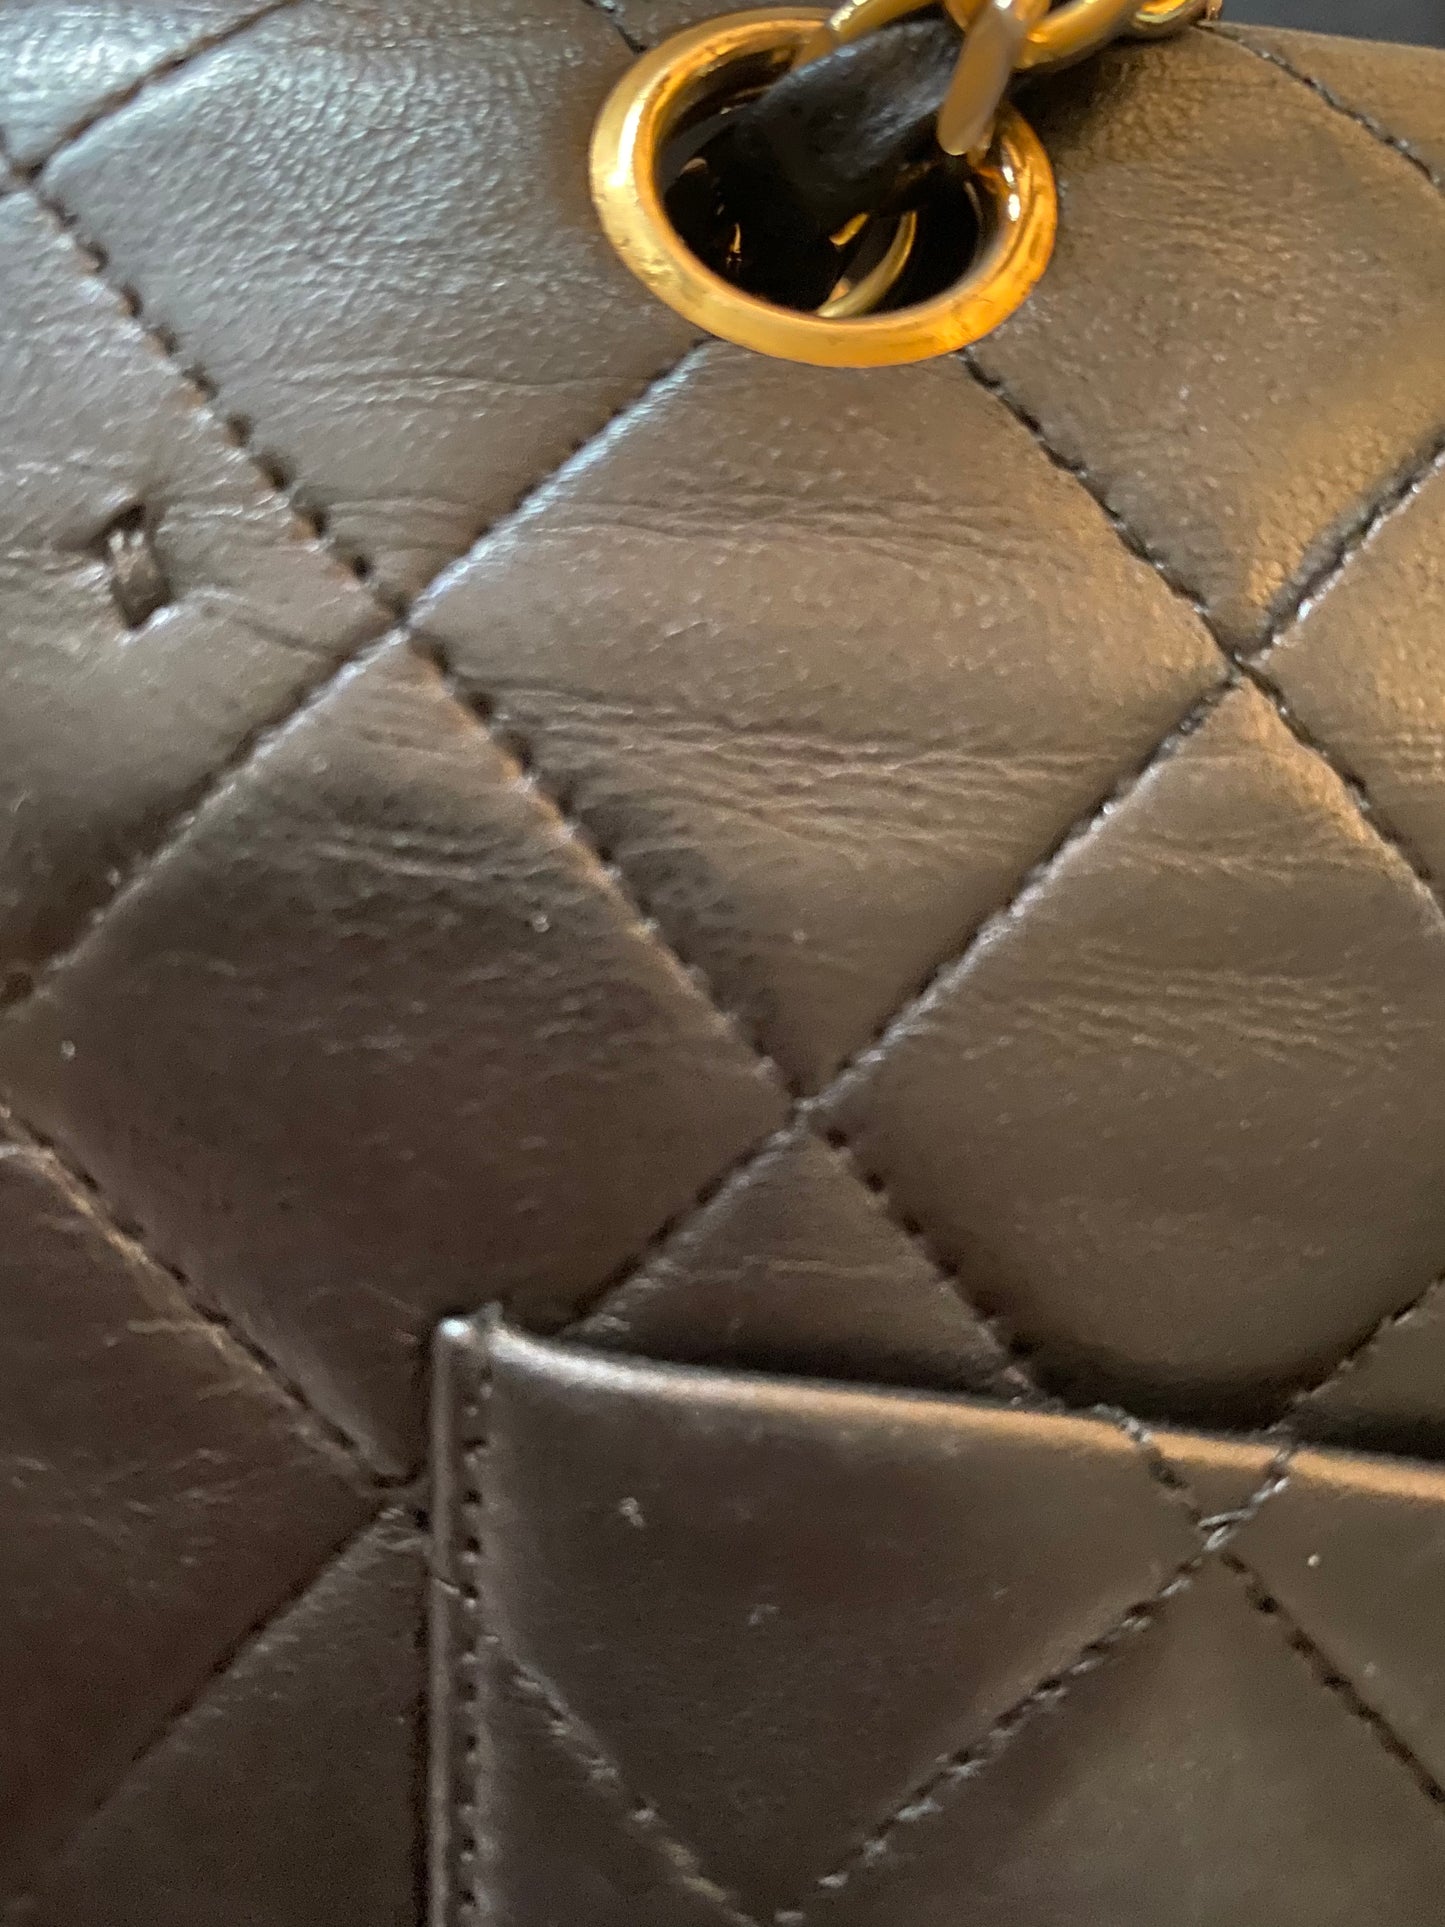 CHANEL Shoulder bags vintage Lysis Paris pre-owned secondhand